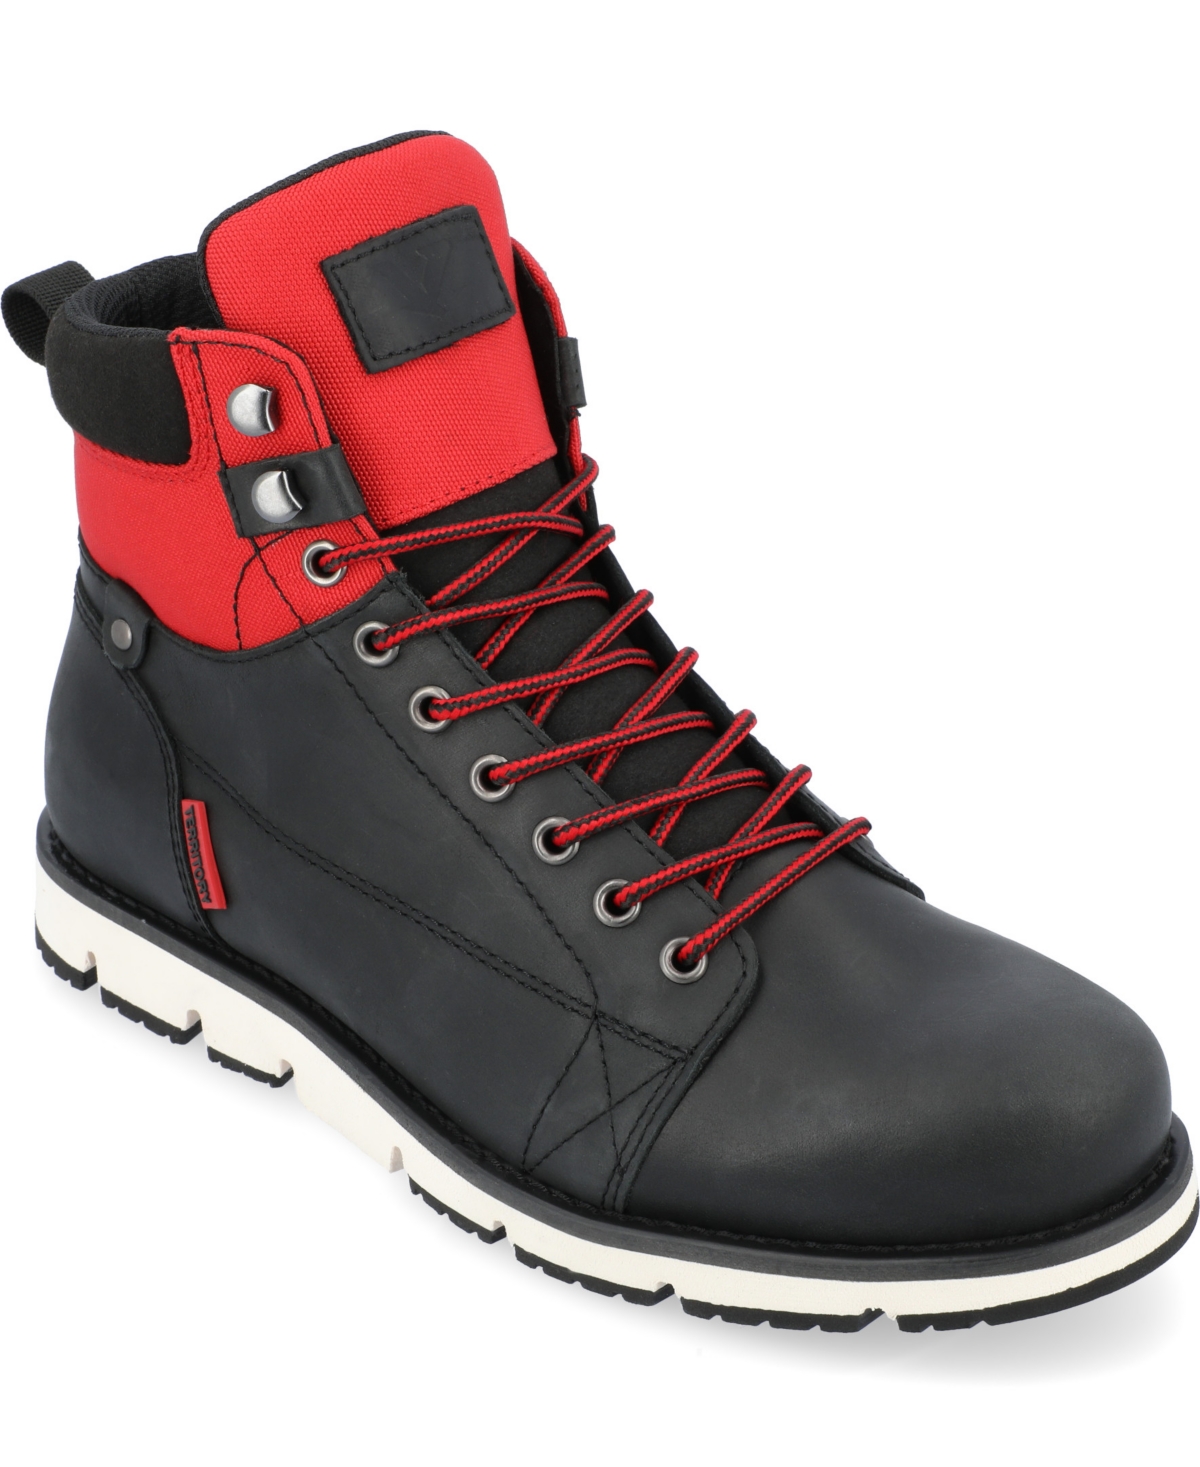 Men's Slickrock Tru Comfort Foam Lace-Up Water Resistant Ankle Boots - Gray